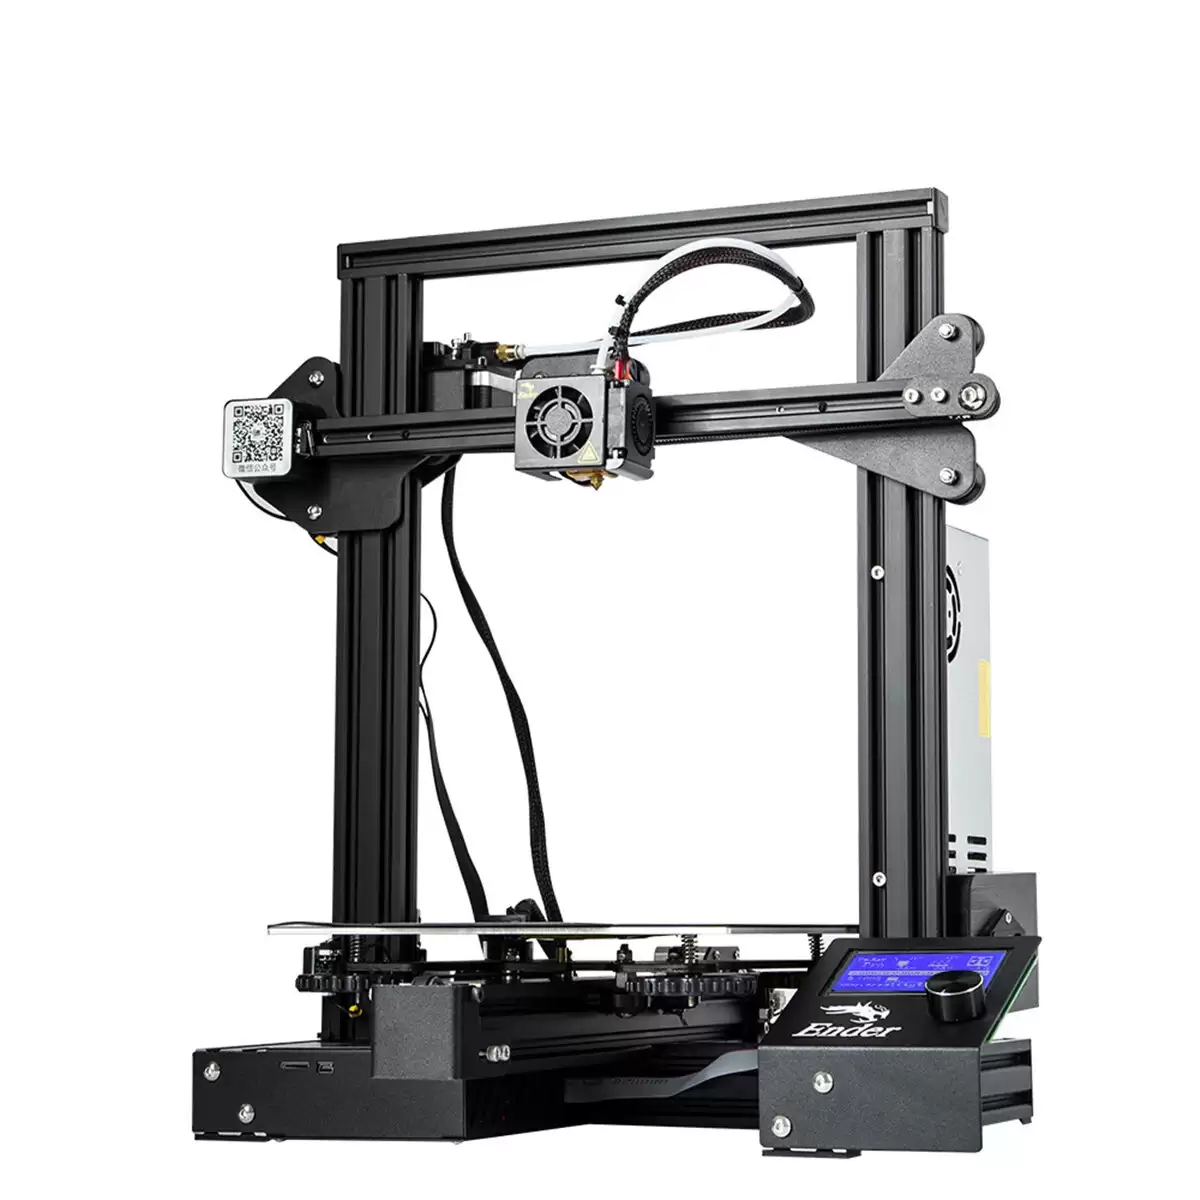 Order In Just $186.00 Creality 3d Ender-3 Pro Diy 3d Printer Kit With This Coupon At Banggood